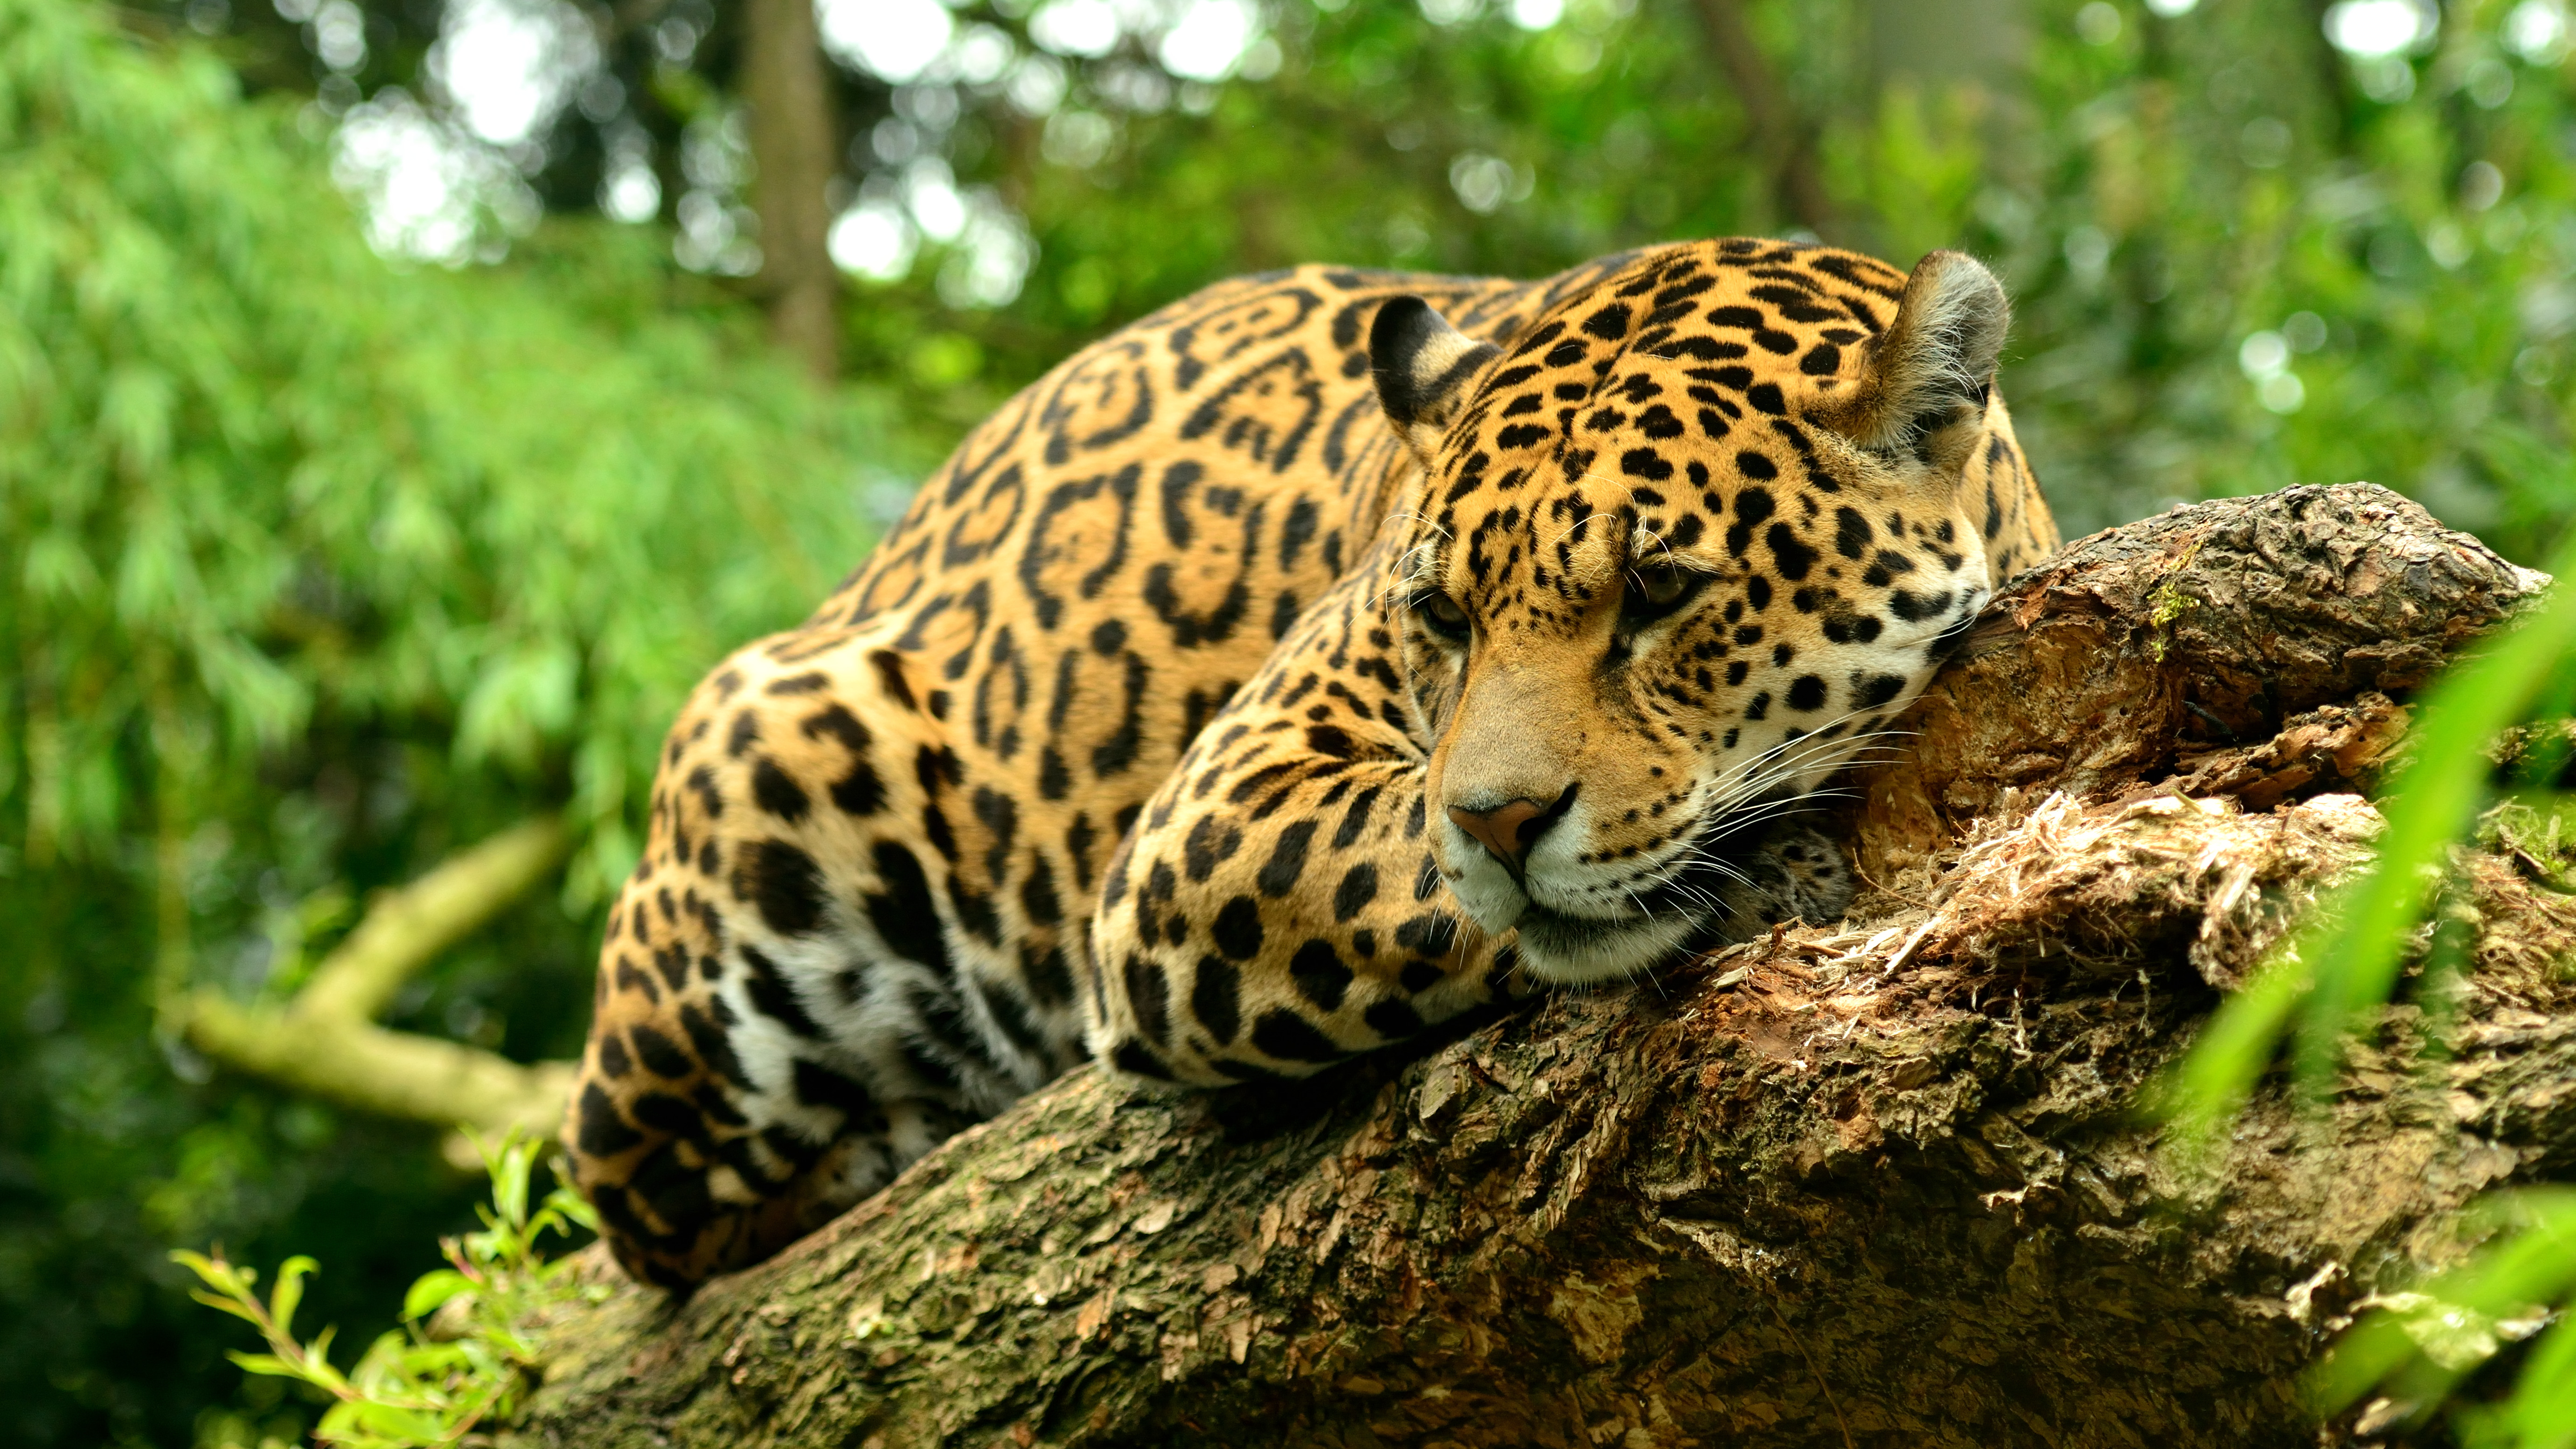 Wallpapers animal leopard beast on the desktop